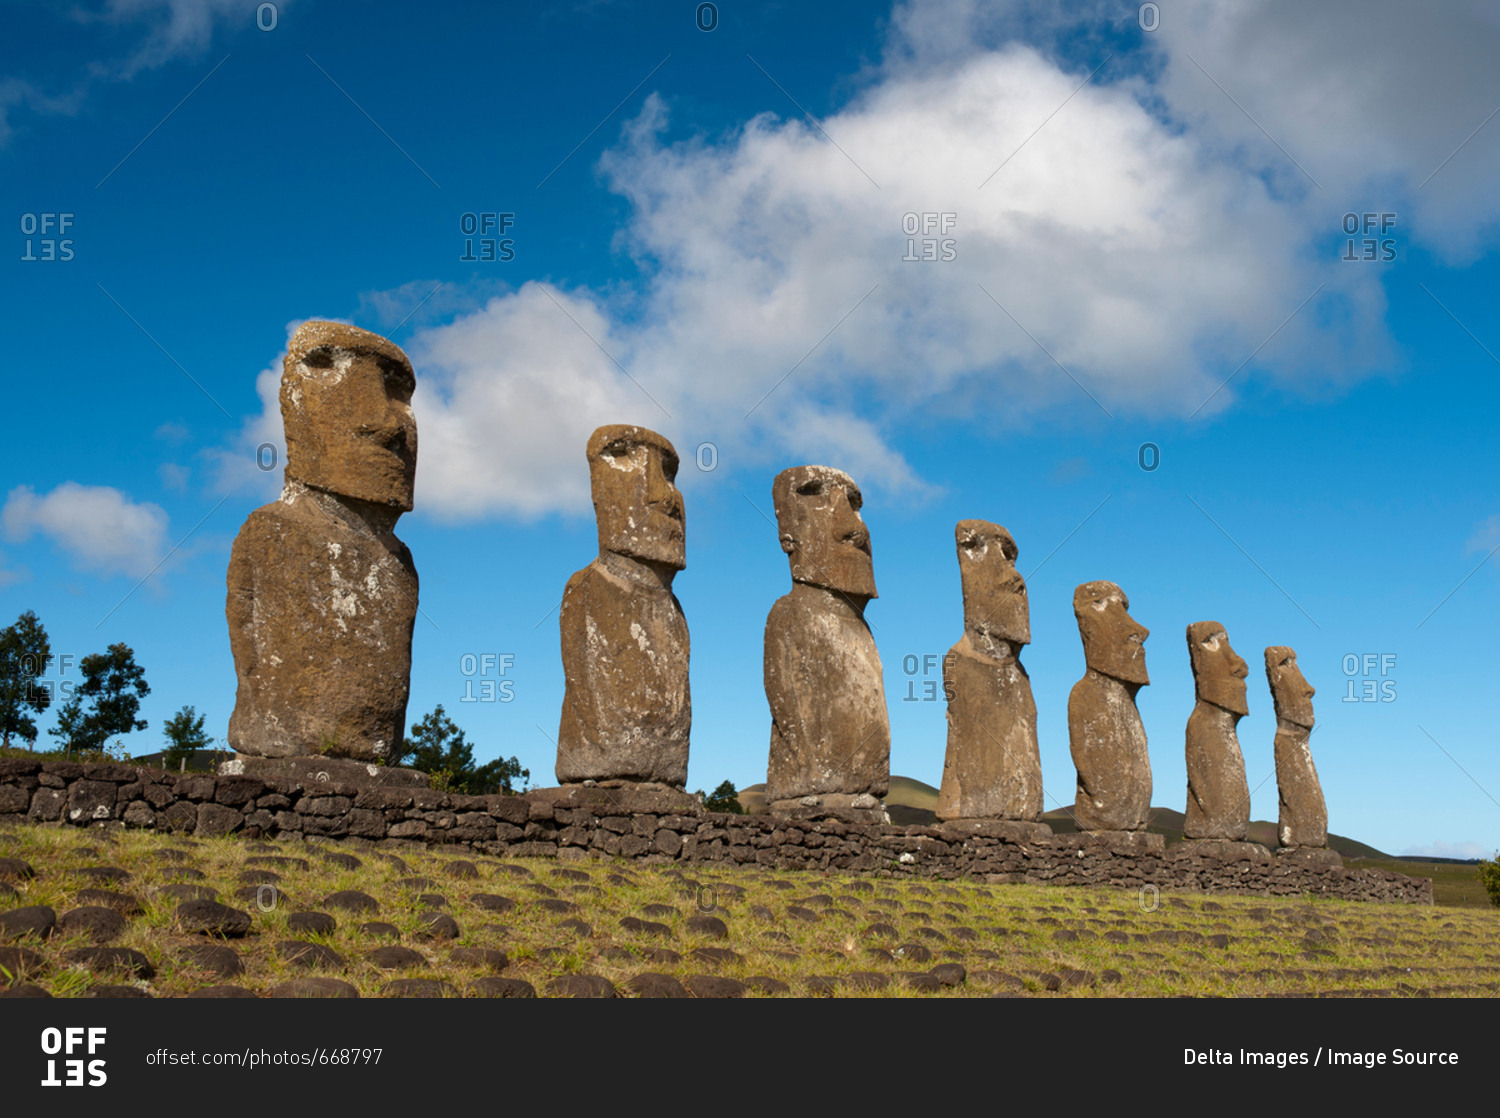 Ahu Akivi, row of seven moai statues on Easter Island